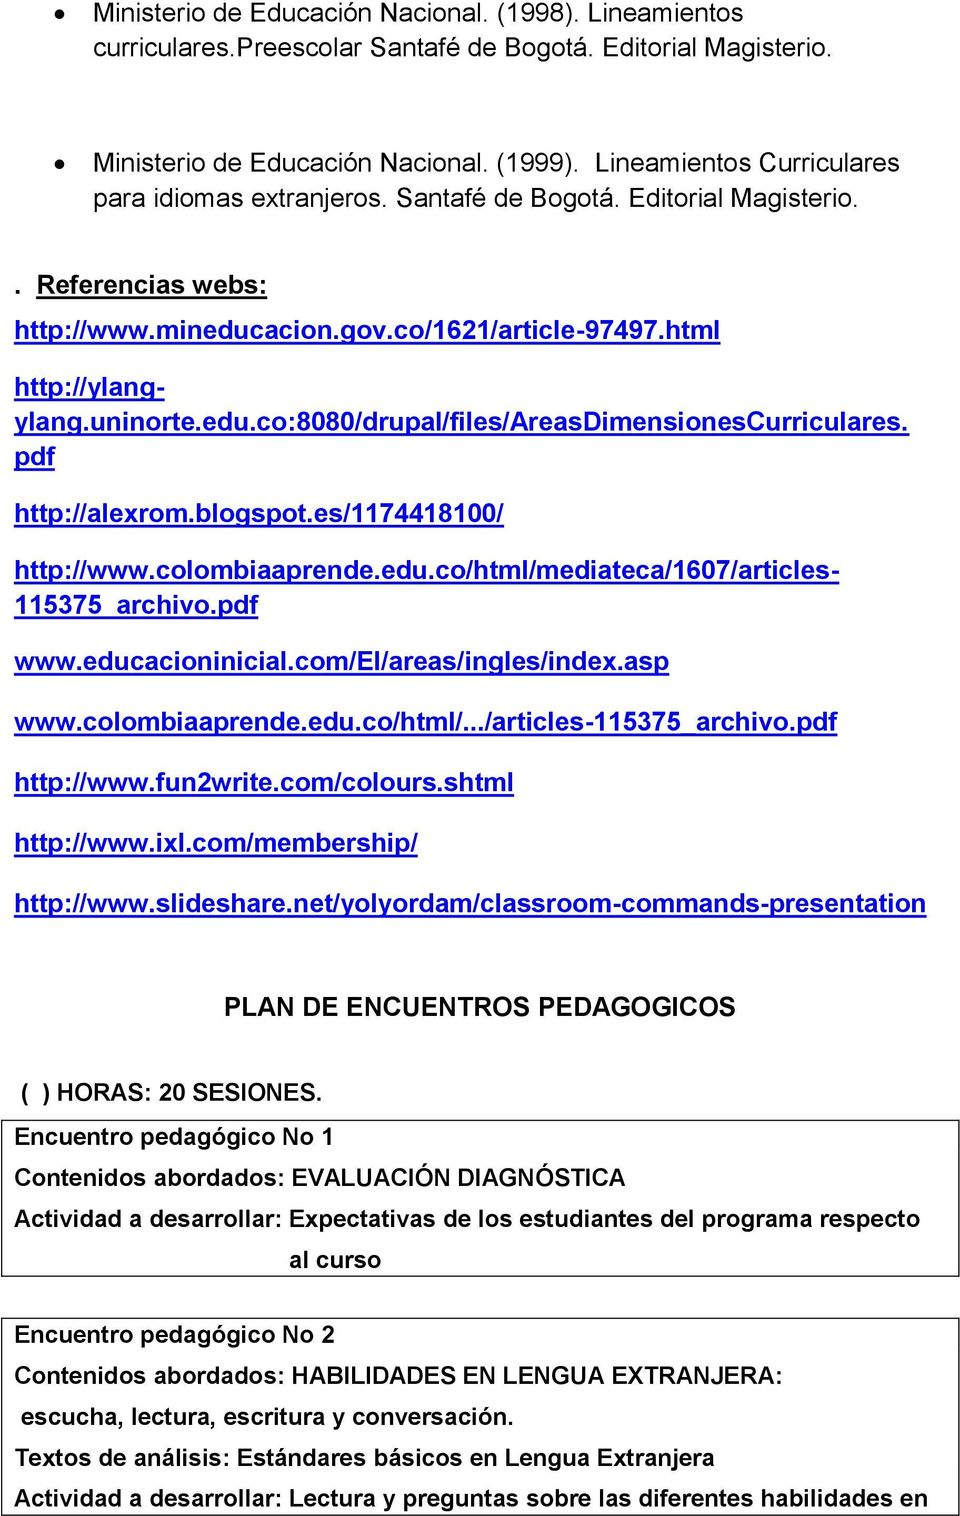 pdf http://alexrom.blogspot.es/1174418100/ http://www.colombiaaprende.edu.co/html/mediateca/1607/articles- 115375_archivo.pdf www.educacioninicial.com/ei/areas/ingles/index.asp www.colombiaaprende.edu.co/html/.../articles-115375_archivo.